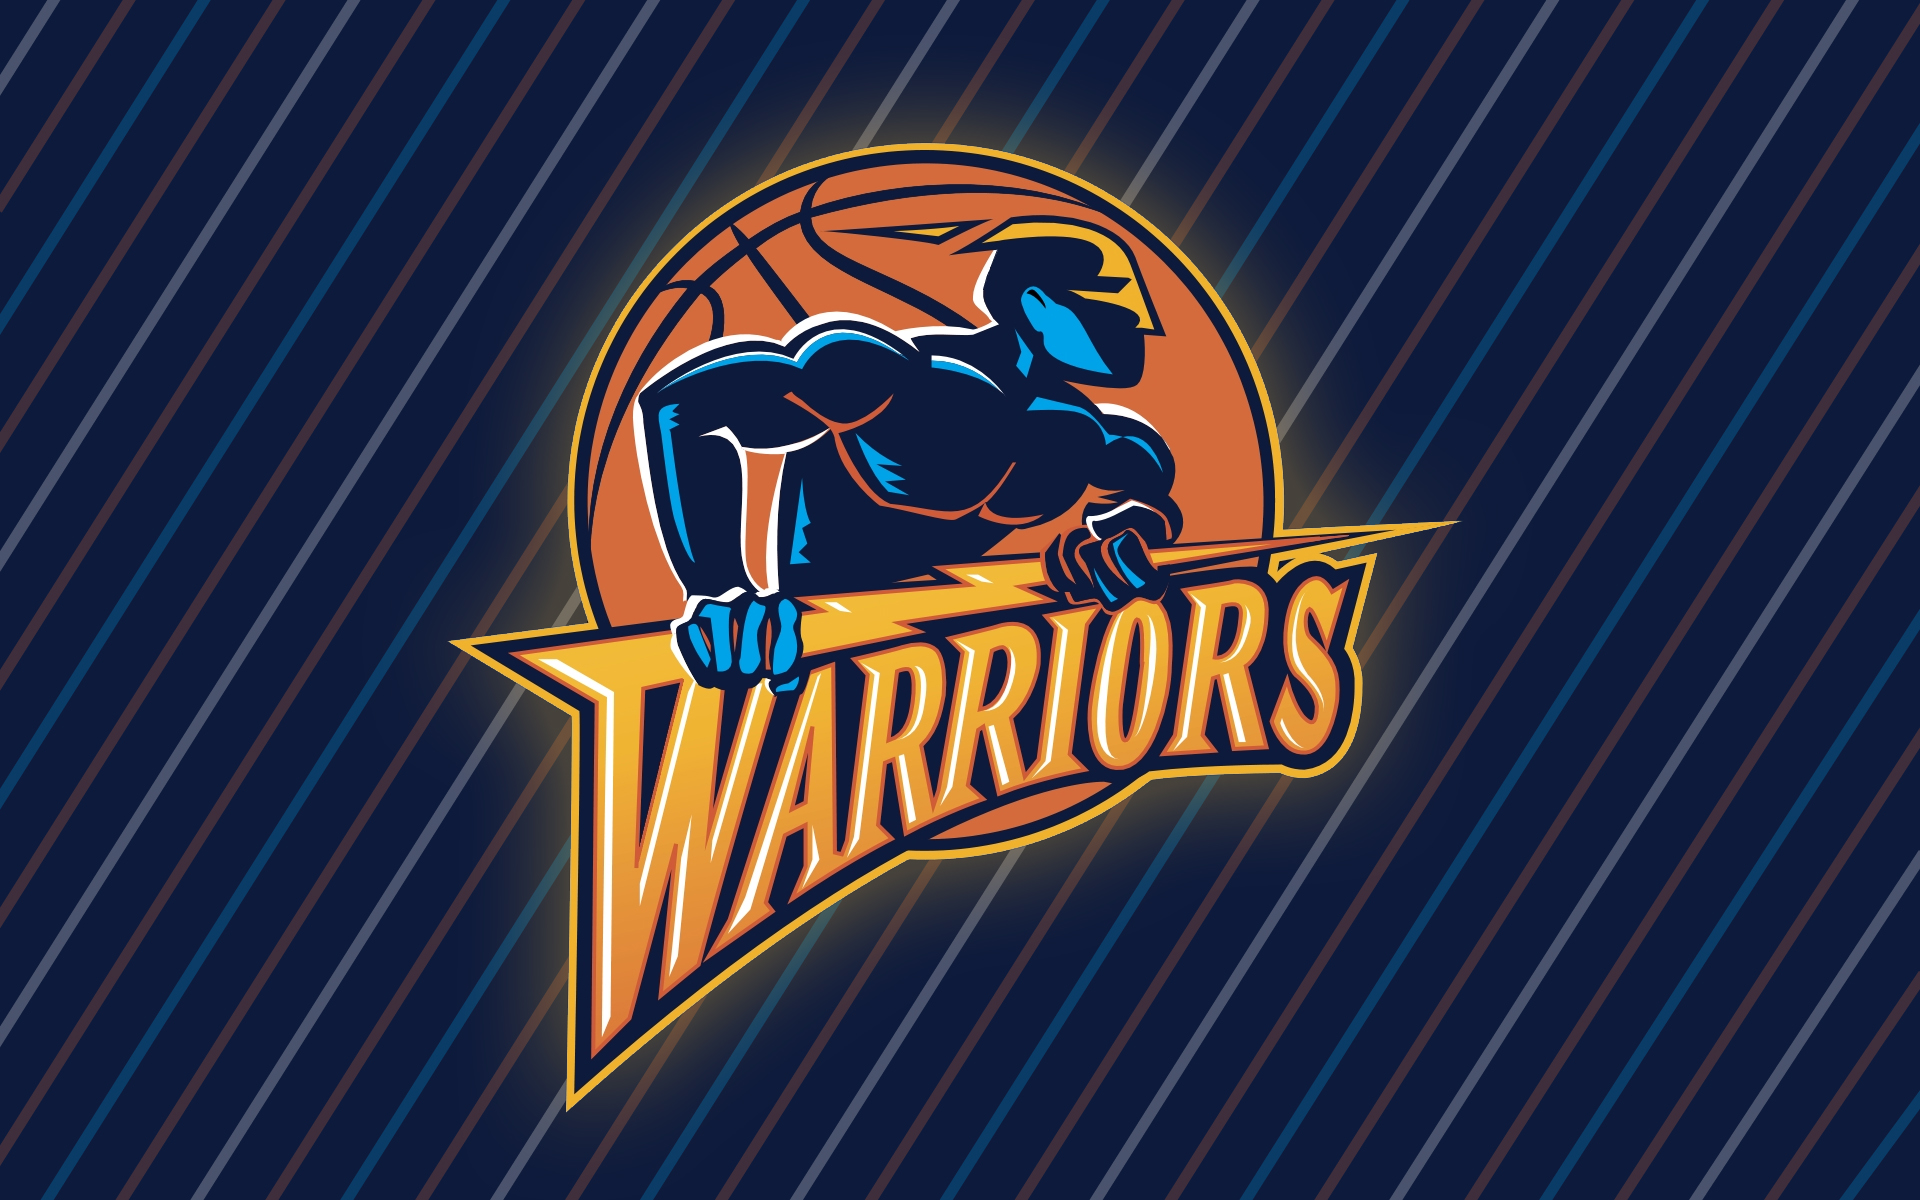 GOLDEN STATE WARRIORS Nba Basketball retro logo Wallpaper